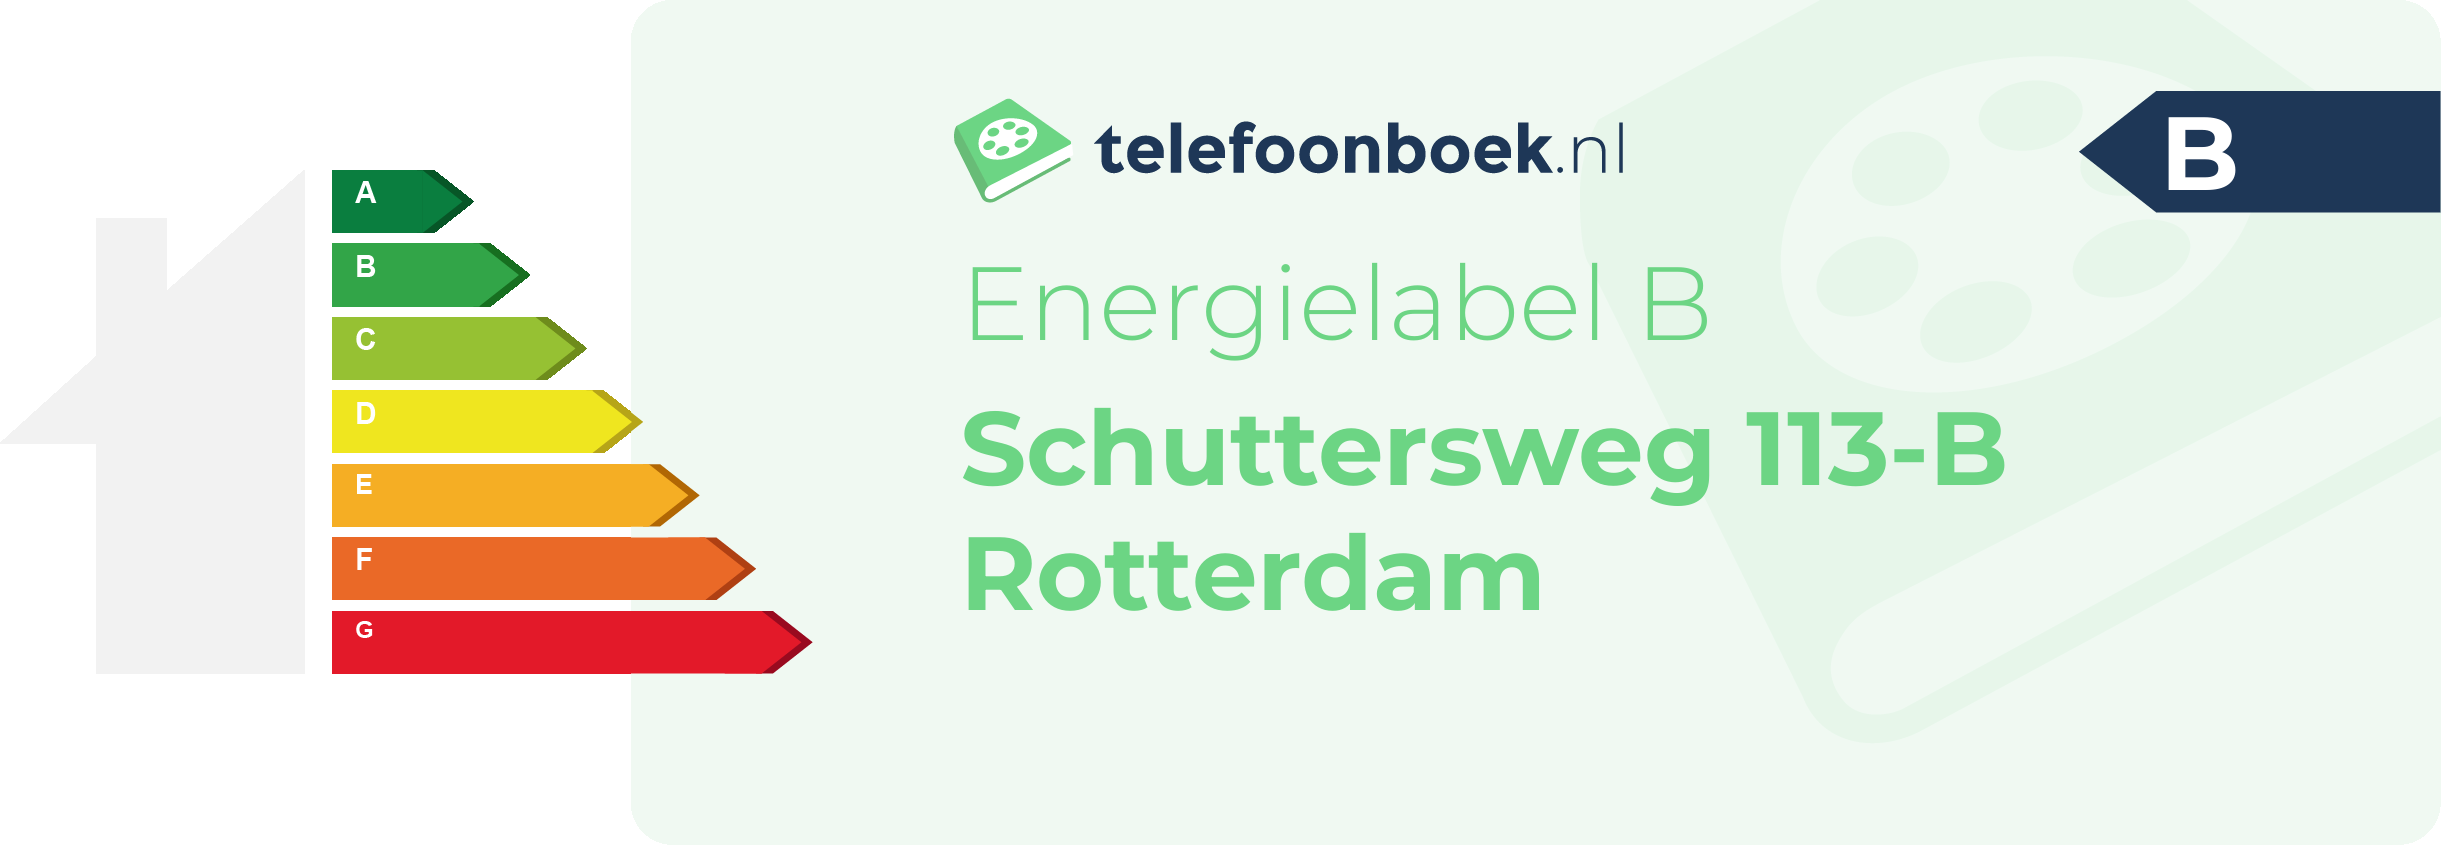 Energielabel Schuttersweg 113-B Rotterdam